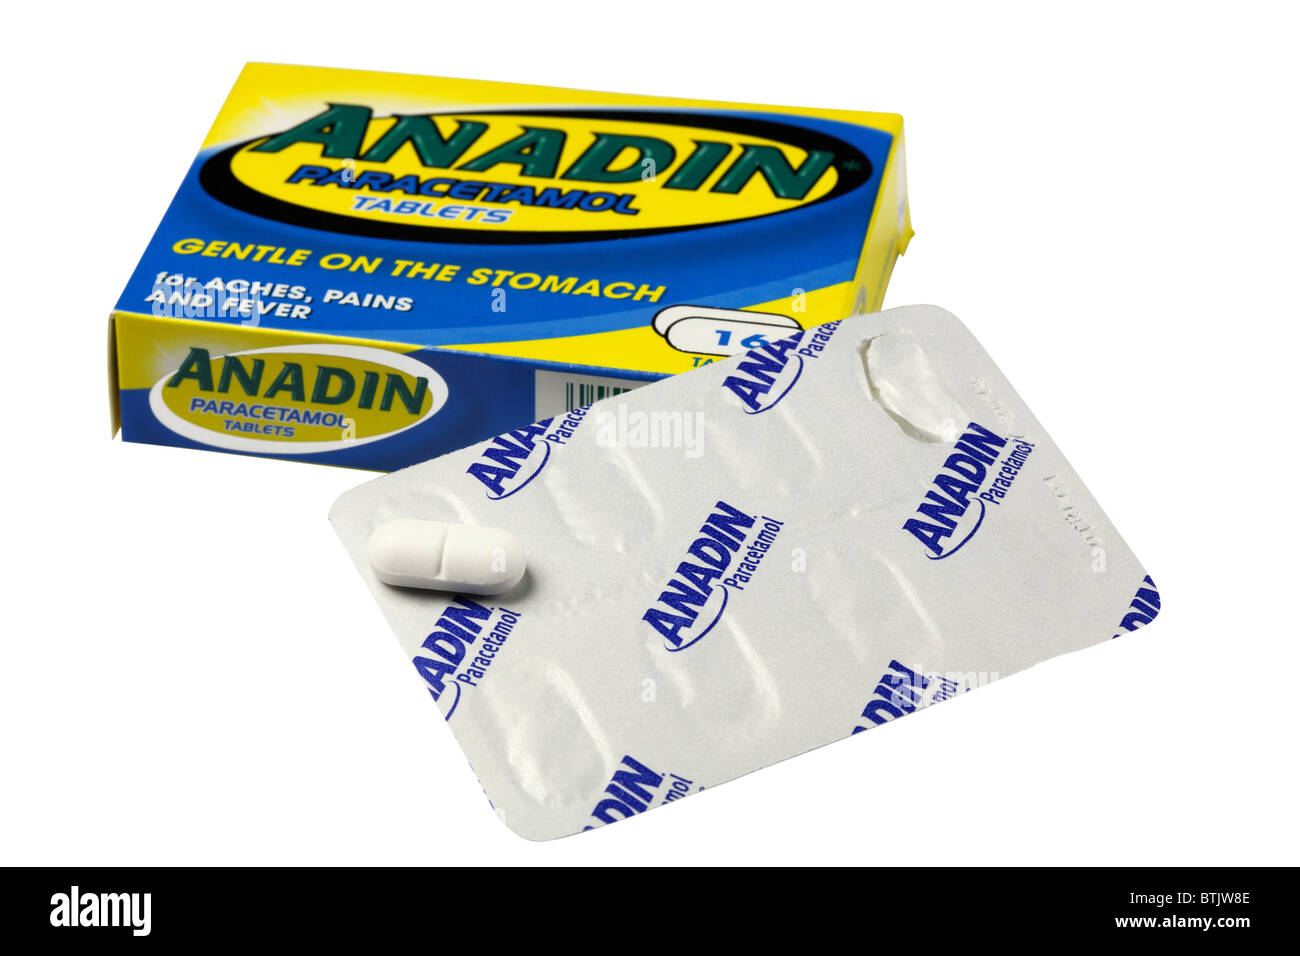 Anadin Paracetamol tablets Stock Photo - Alamy